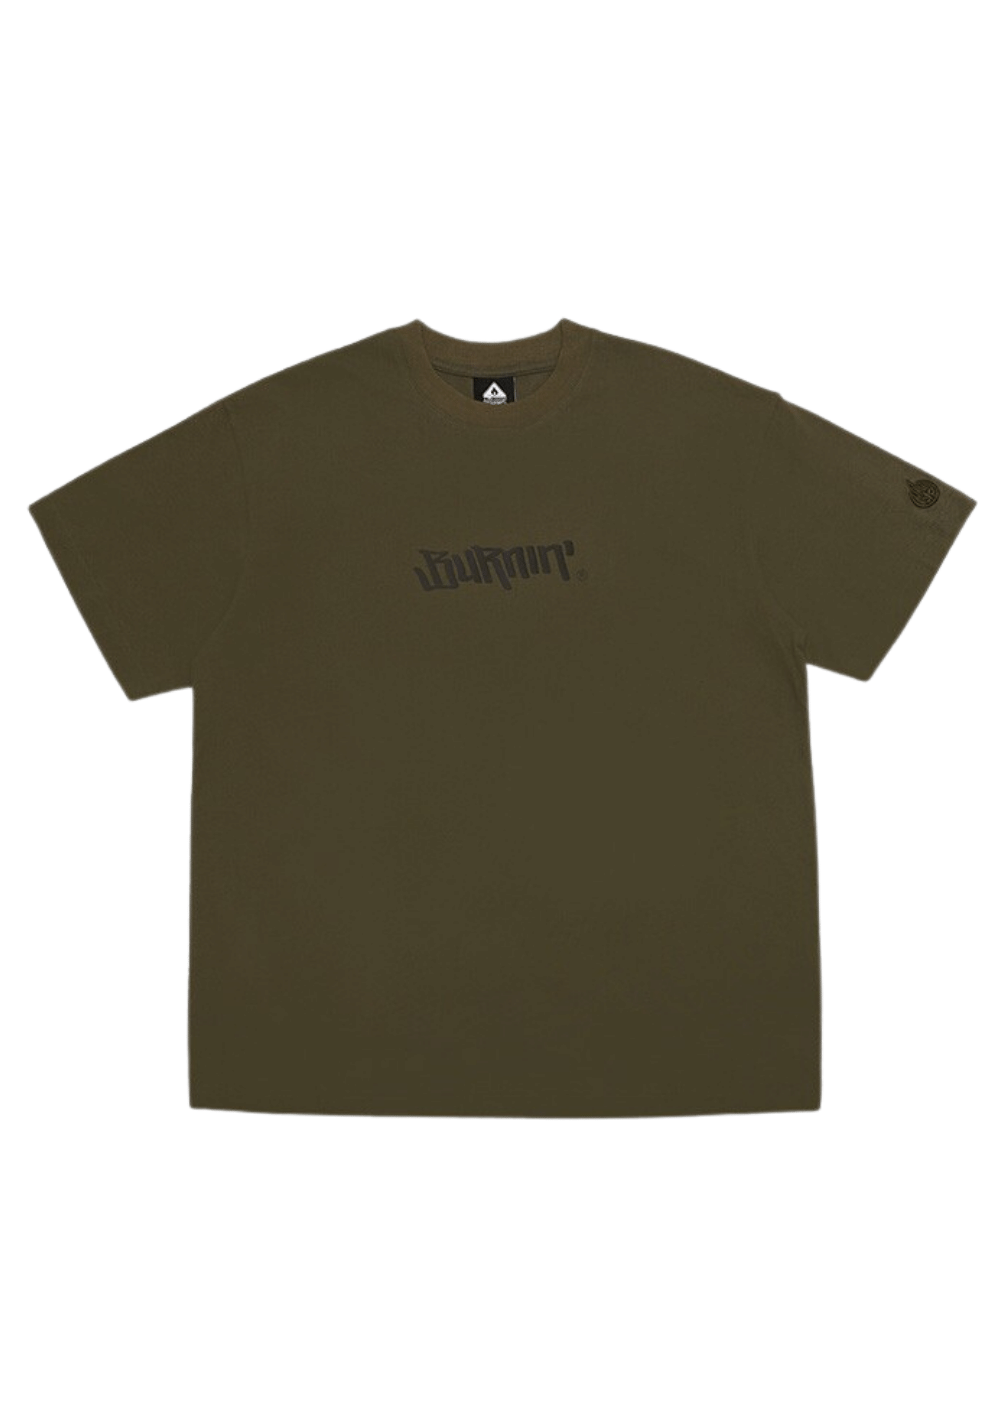 Horizontal Logo Oversized T-Shirt-Army Green - PSYLOS 1, Horizontal Logo Oversized T-Shirt-Army Green, T-Shirt, Burnin, PSYLOS 1